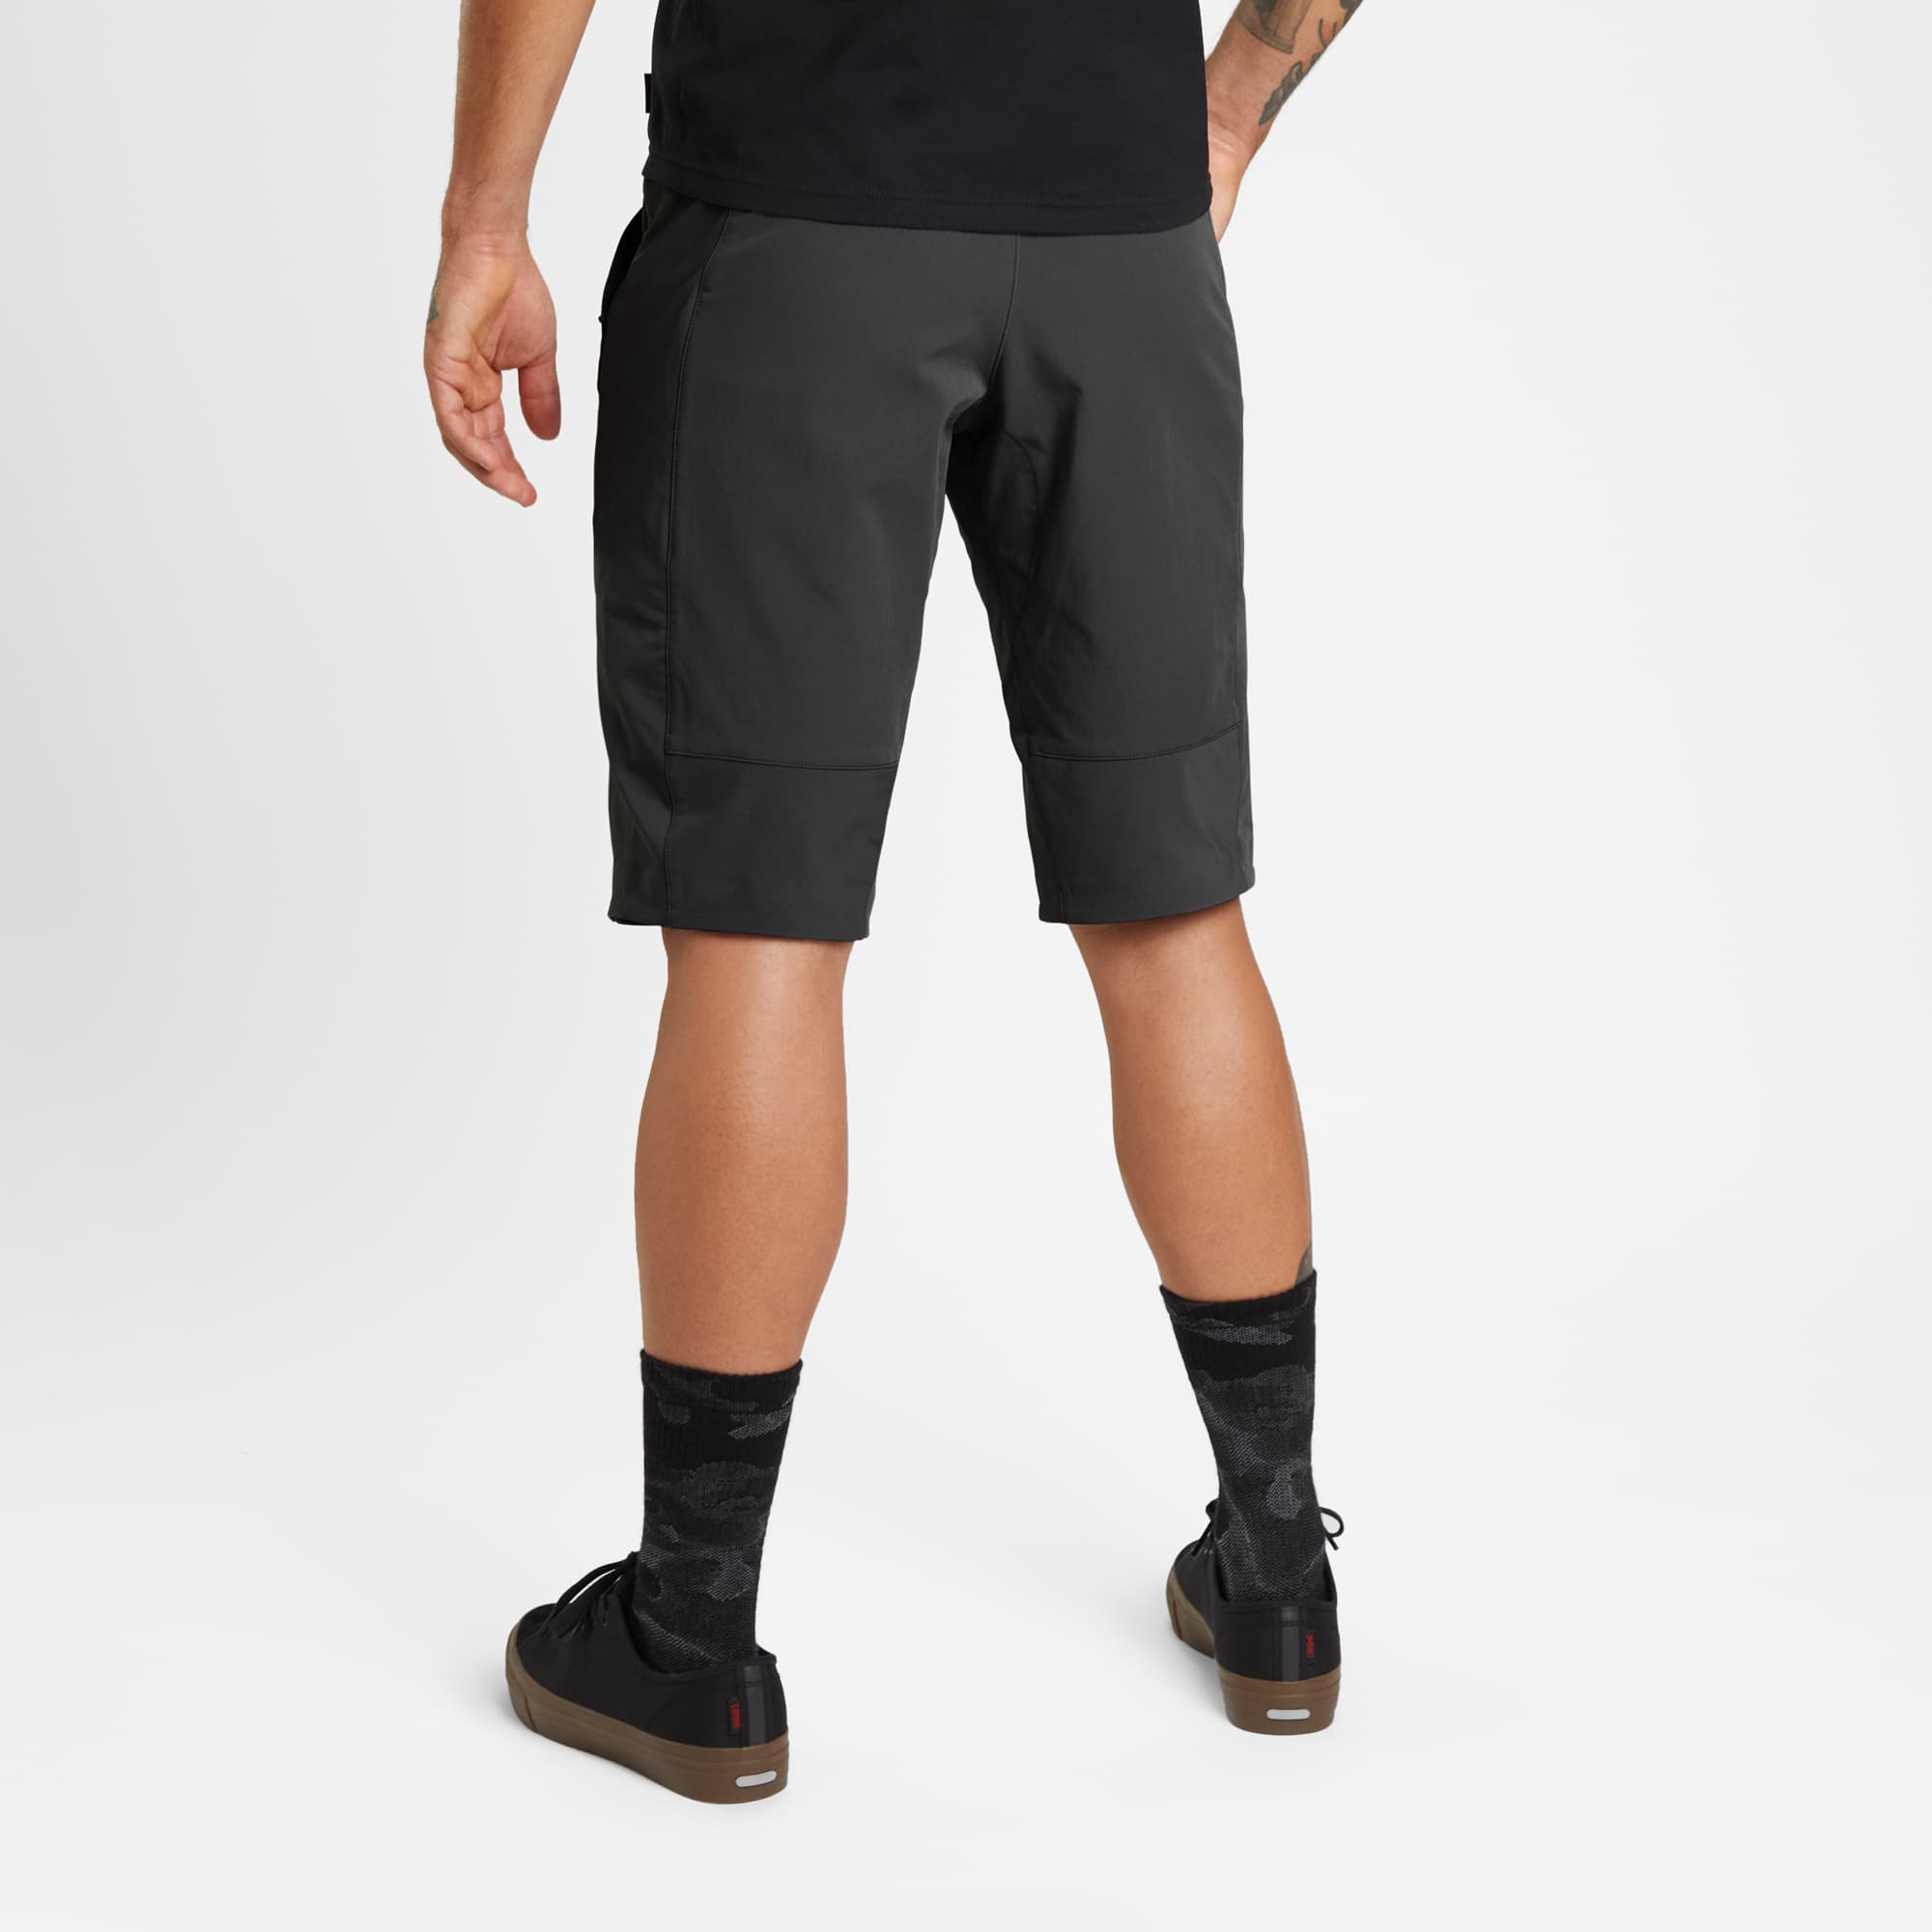 Men's tech Sutro Short in black worn by a man back view #color_black